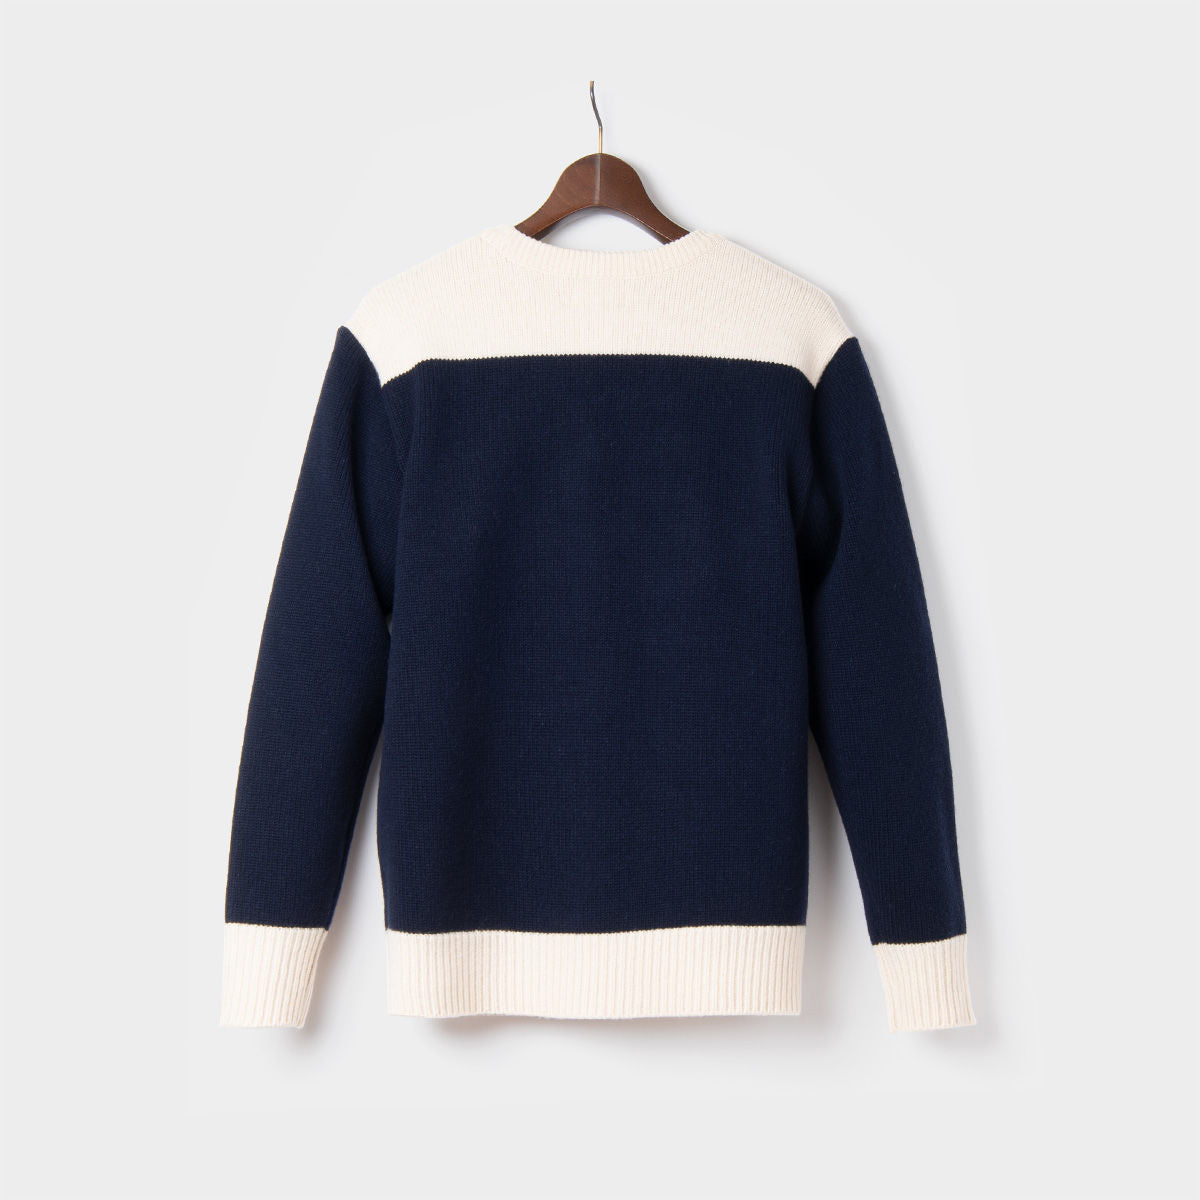 Orgueil Knit Sweater